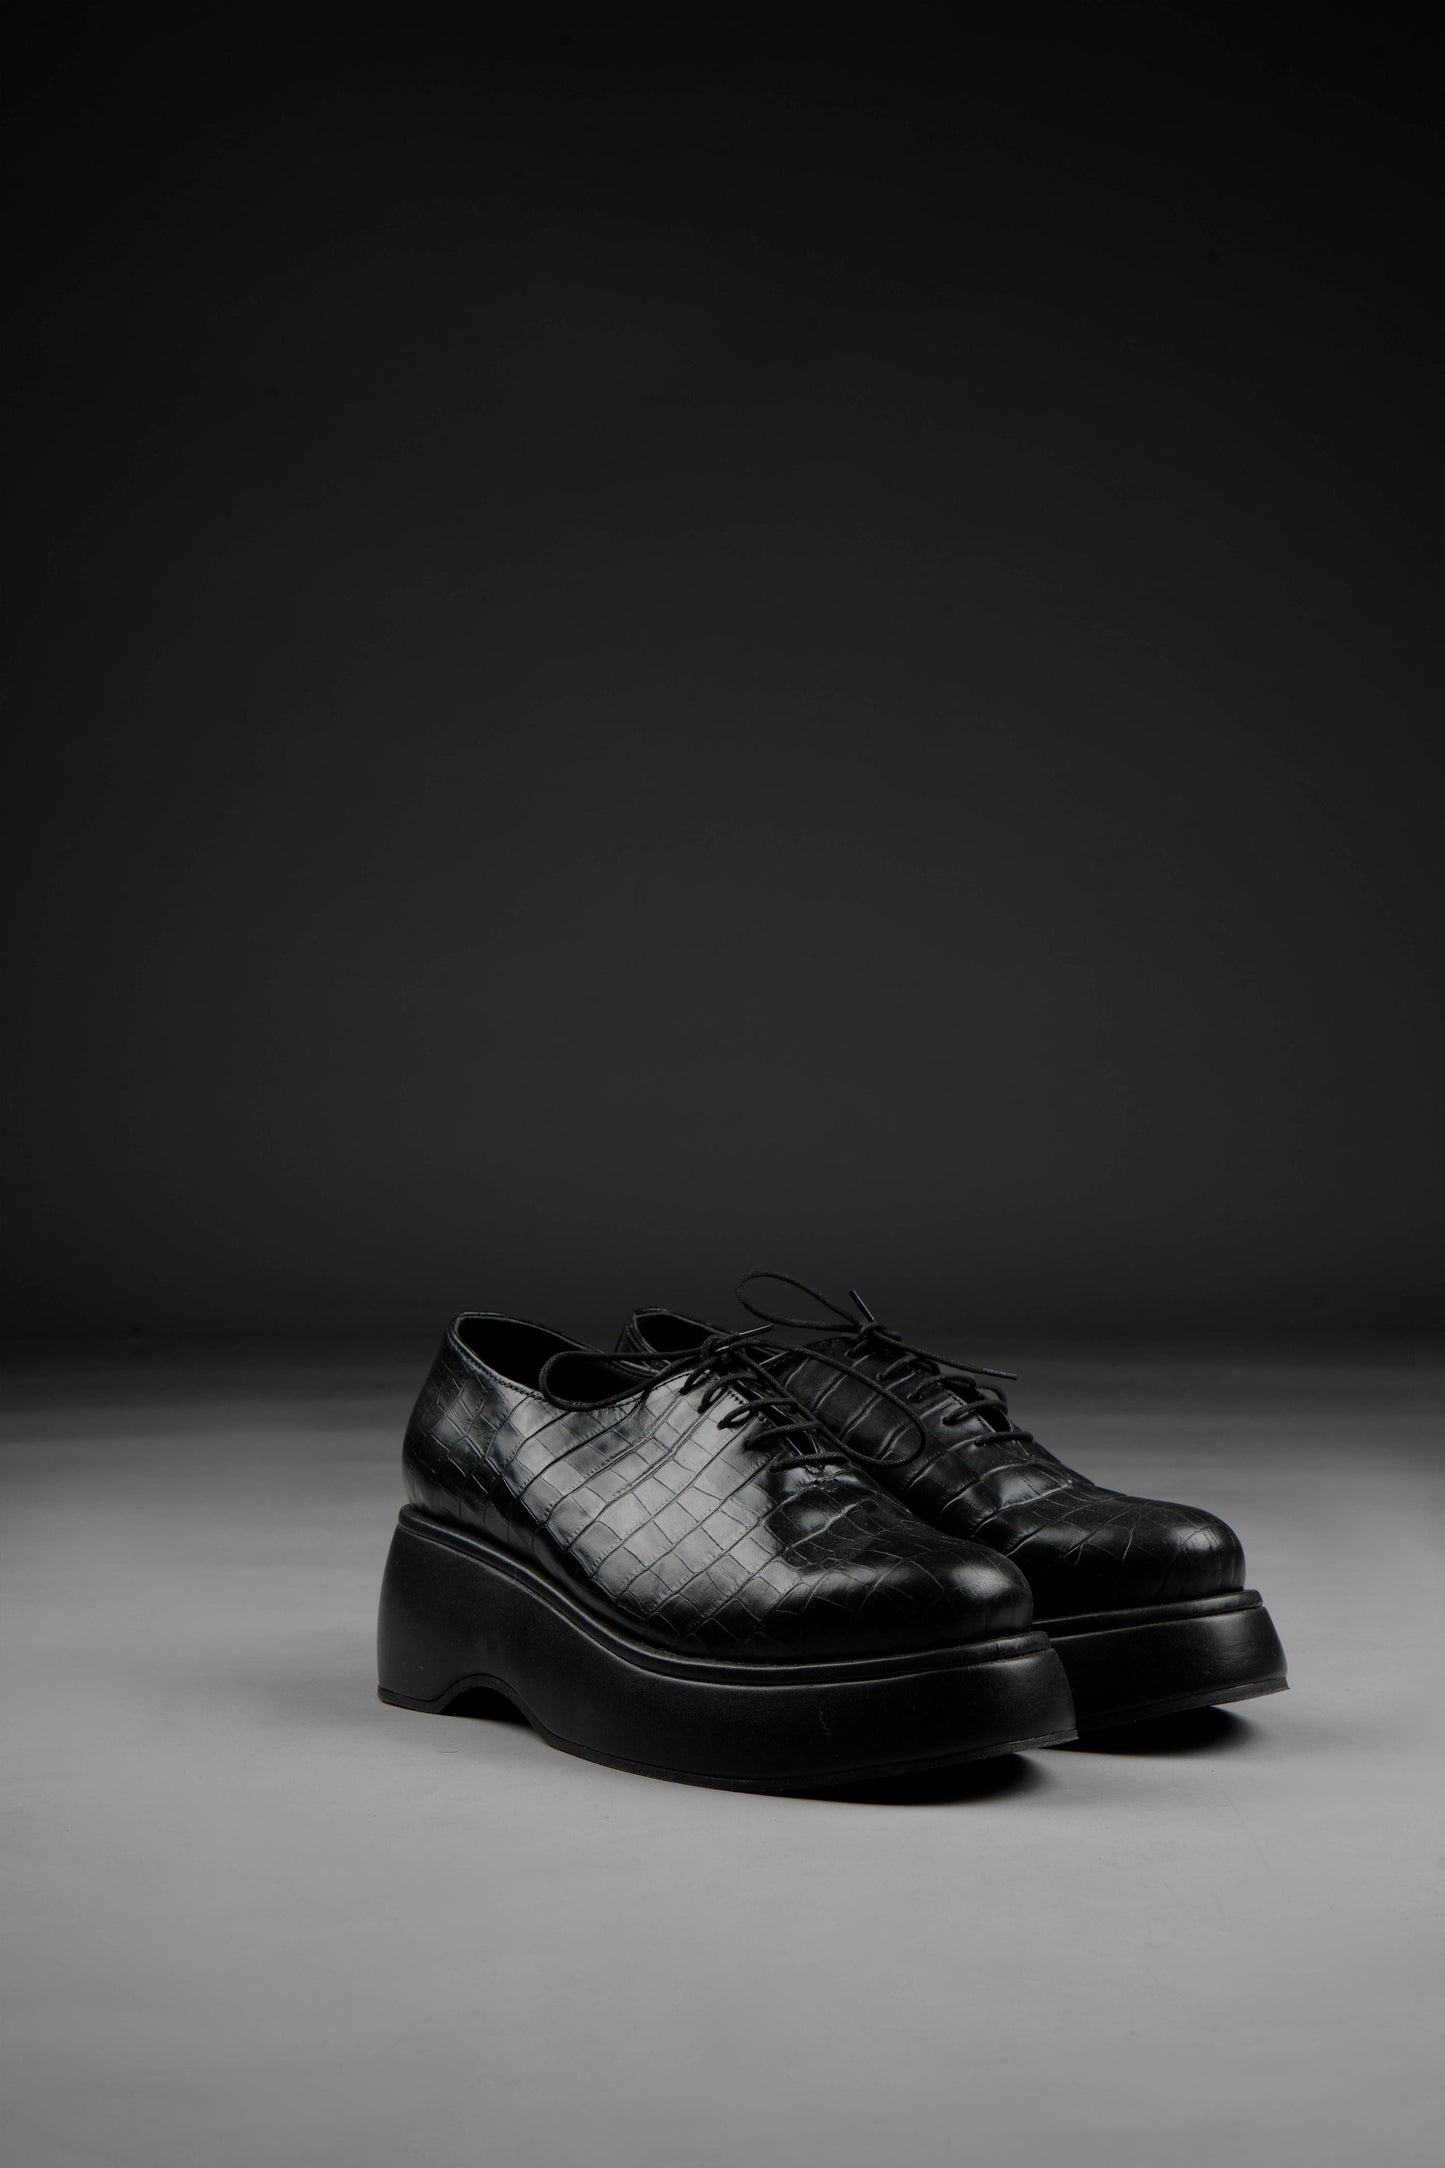 Bosco in Black shoes